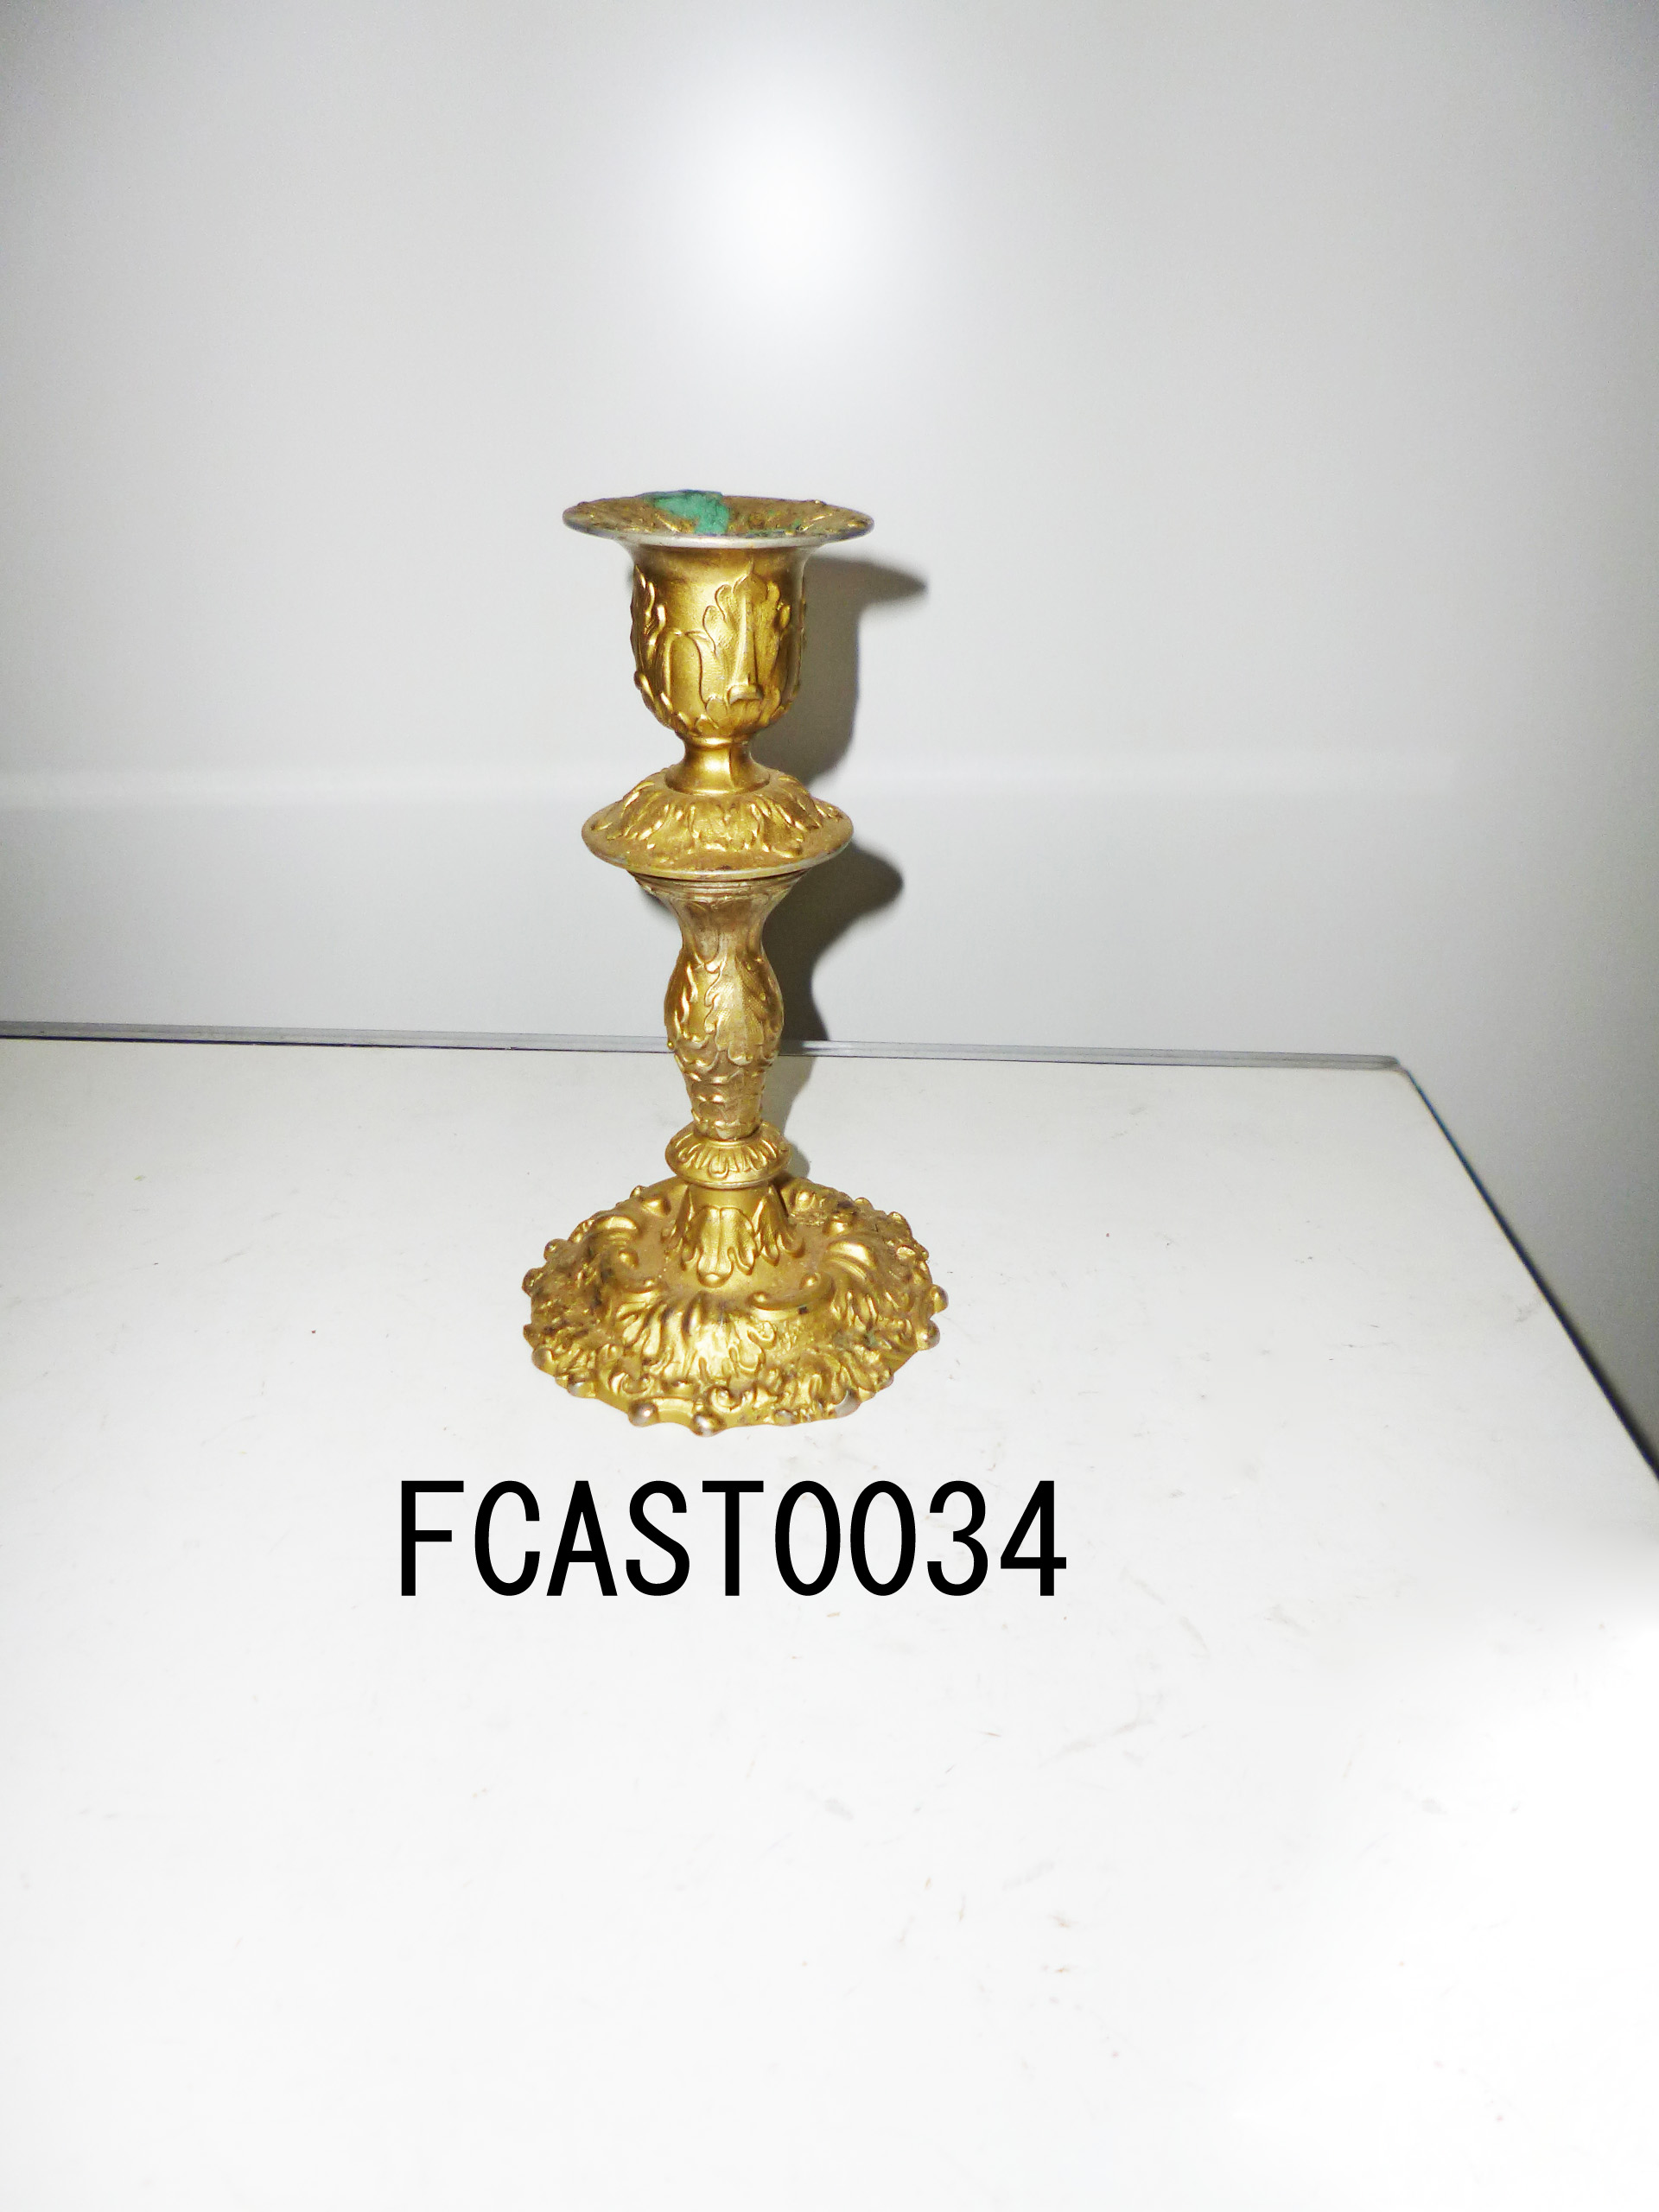 FCAST0034